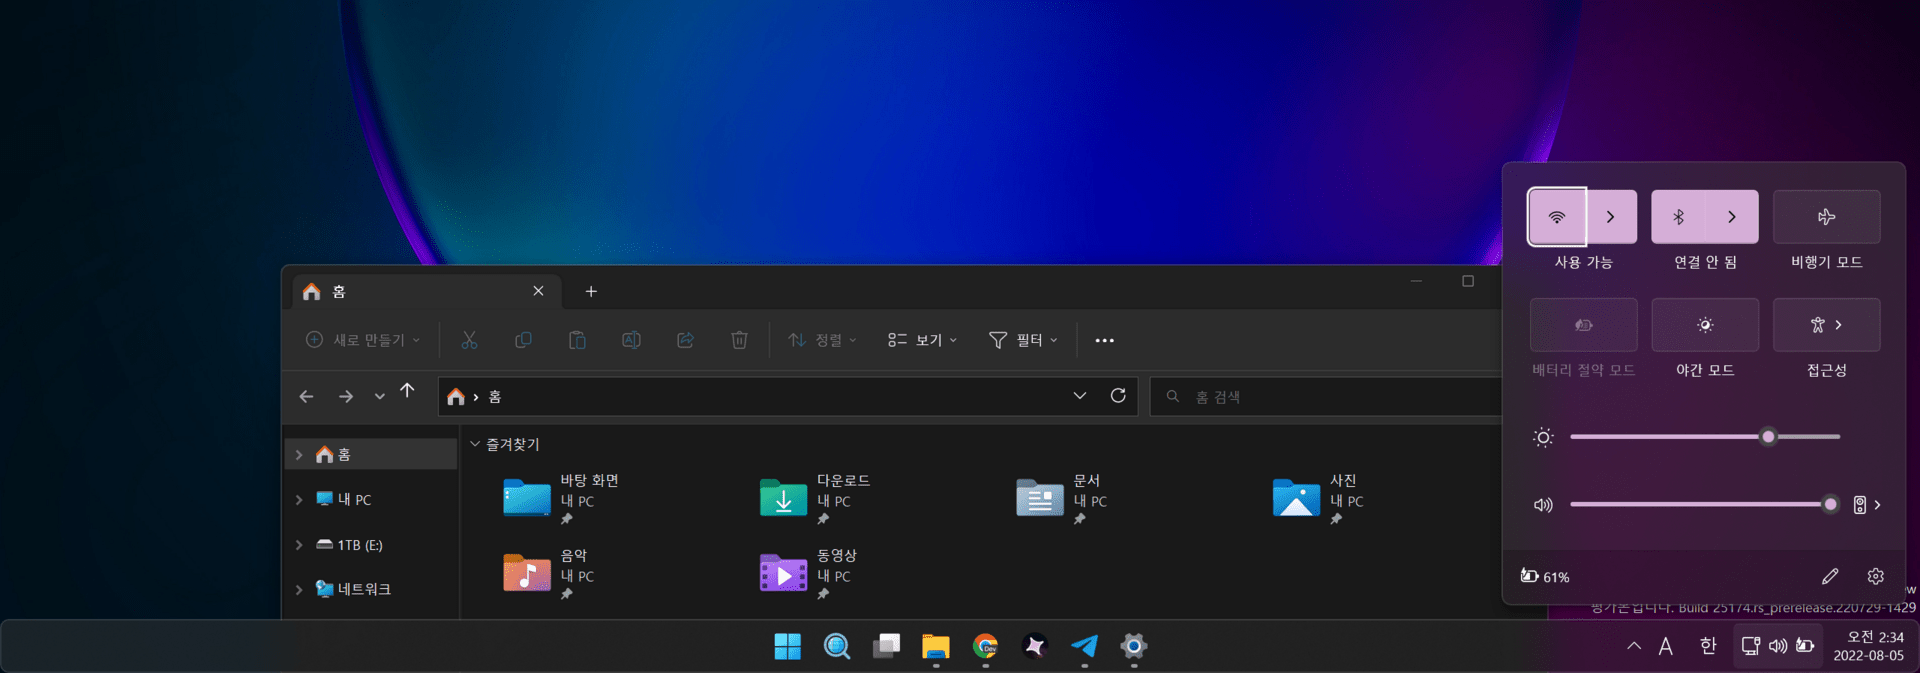 Windows 11 taskbar with rounded corners